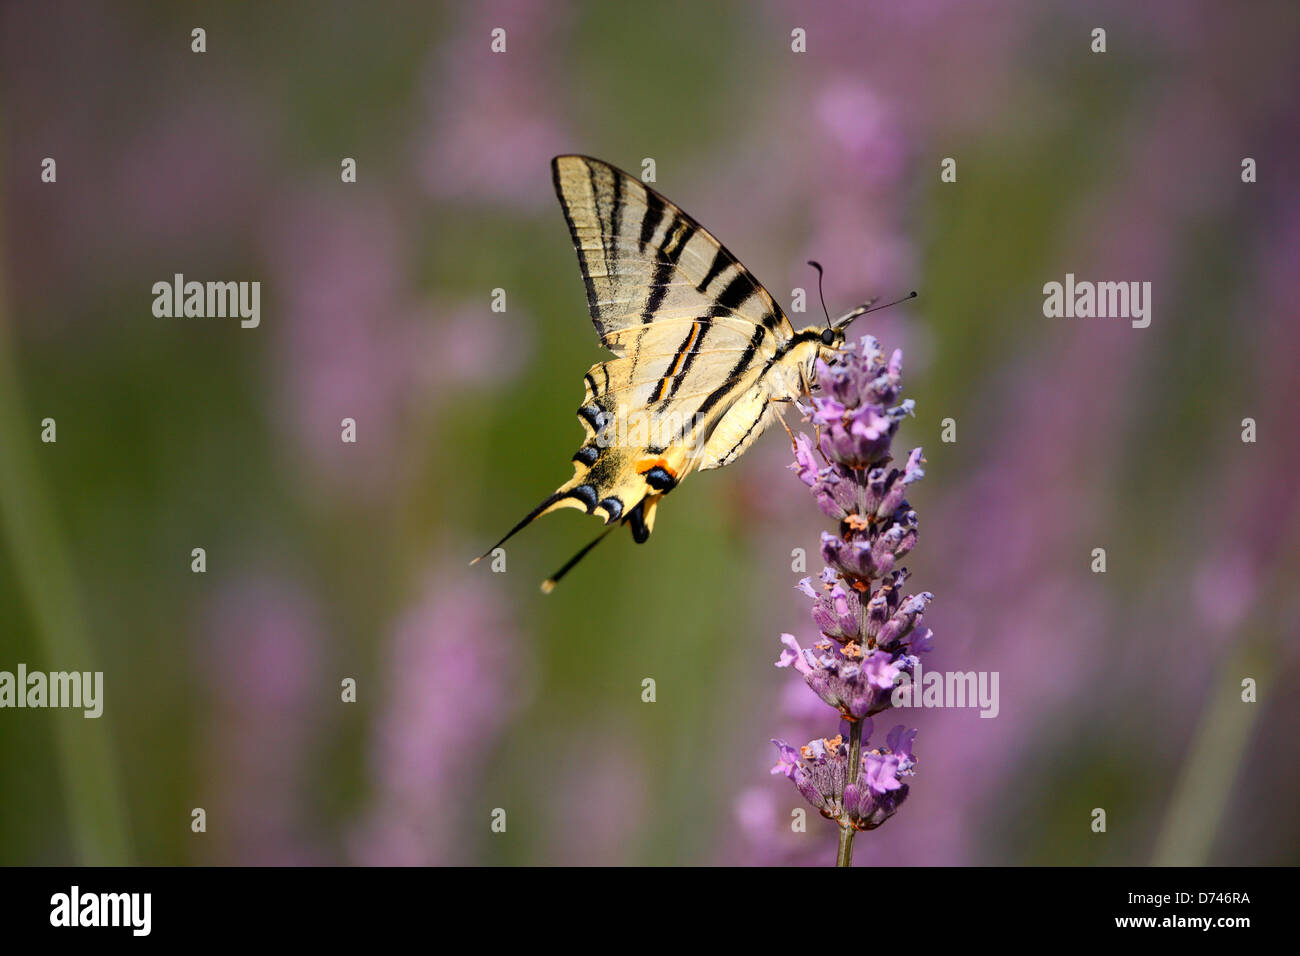 Knappen Schwalbenschwanz Schmetterling hautnah auf Lavendel Blume Stockfoto